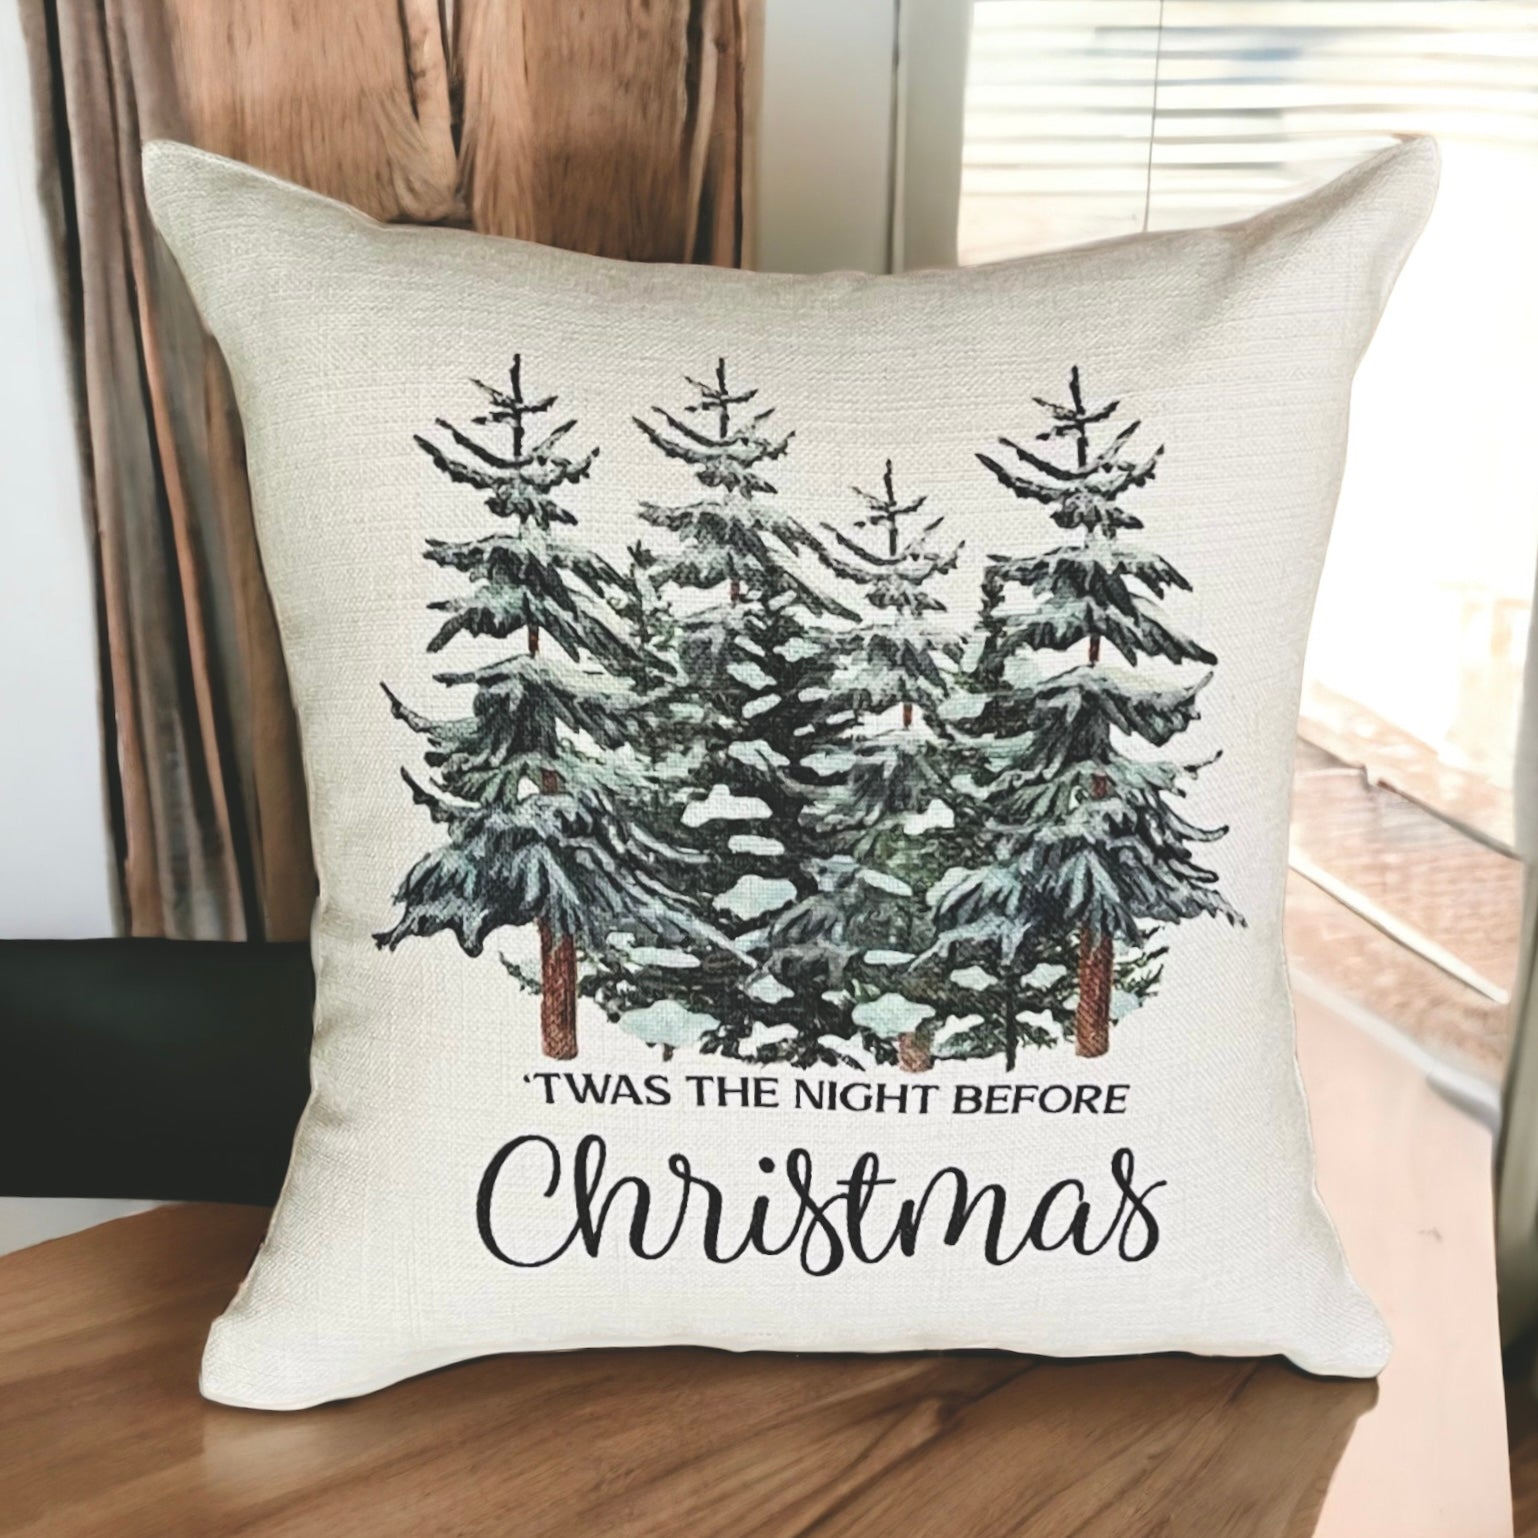 Christmas Pillow -‘Twas the night before Christmas